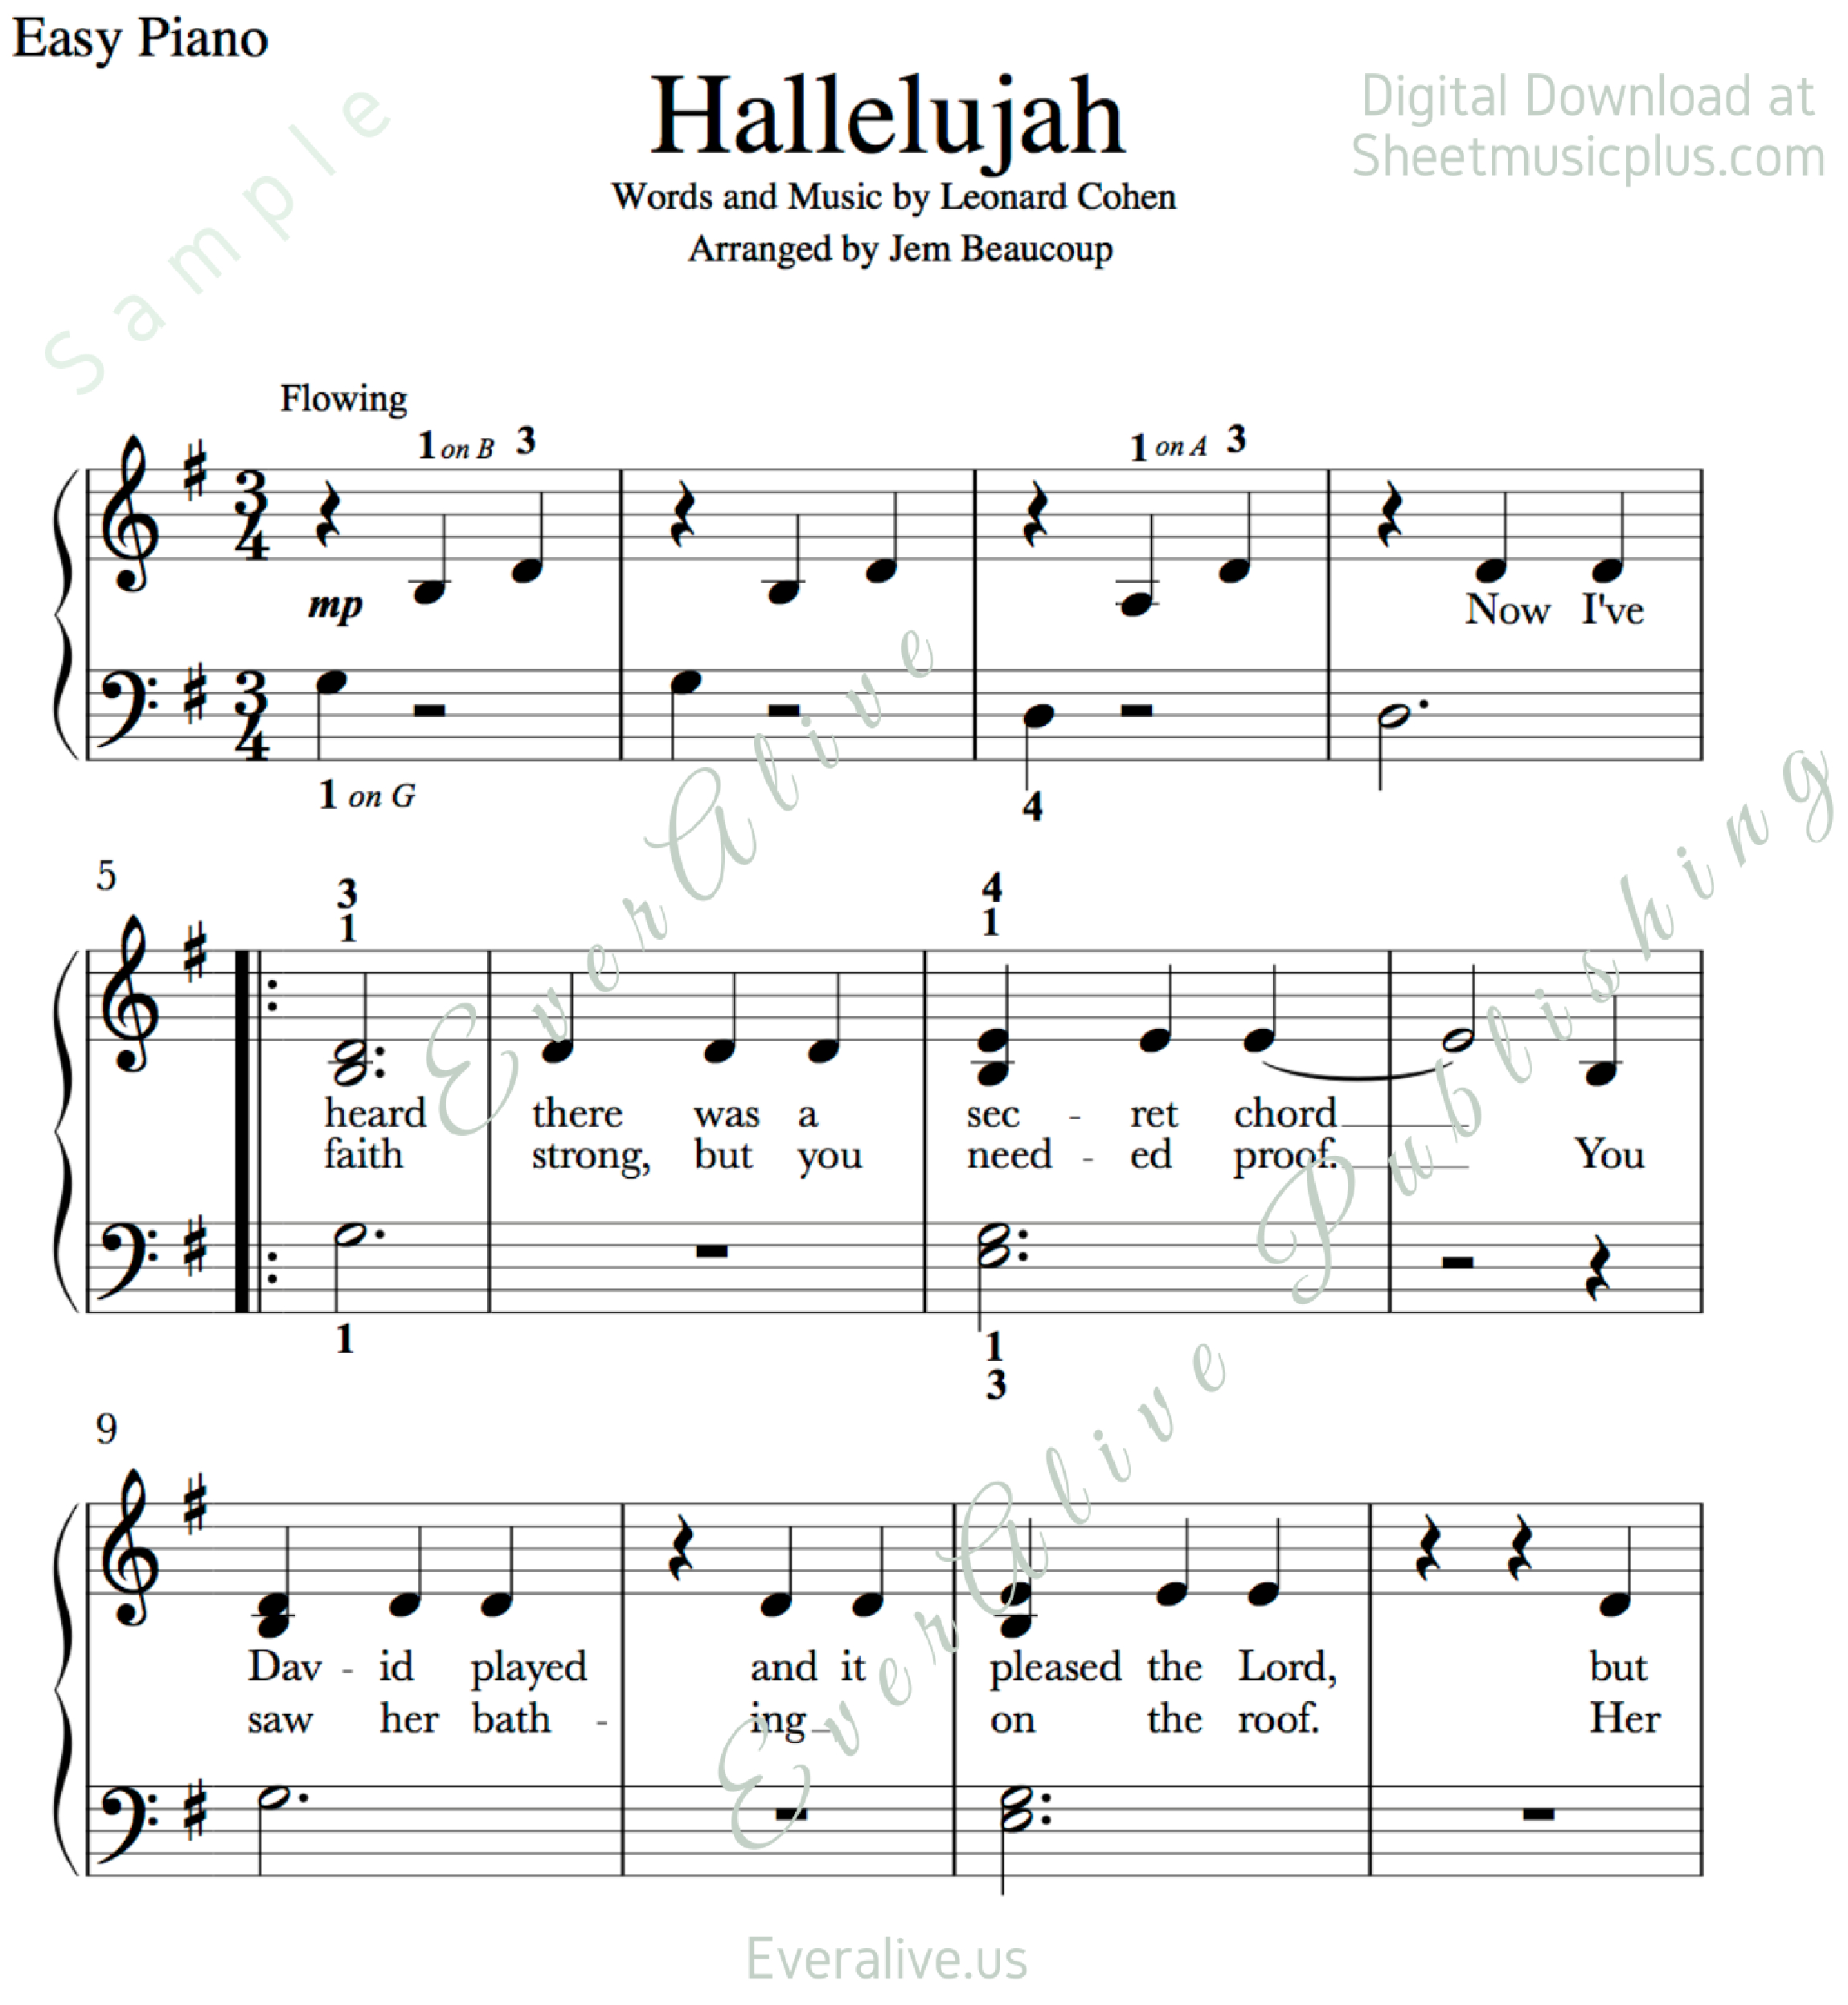 Print And Download. Hallelujah Easy Piano Music. Leonard Cohen - Hallelujah Piano Sheet Music Free Printable